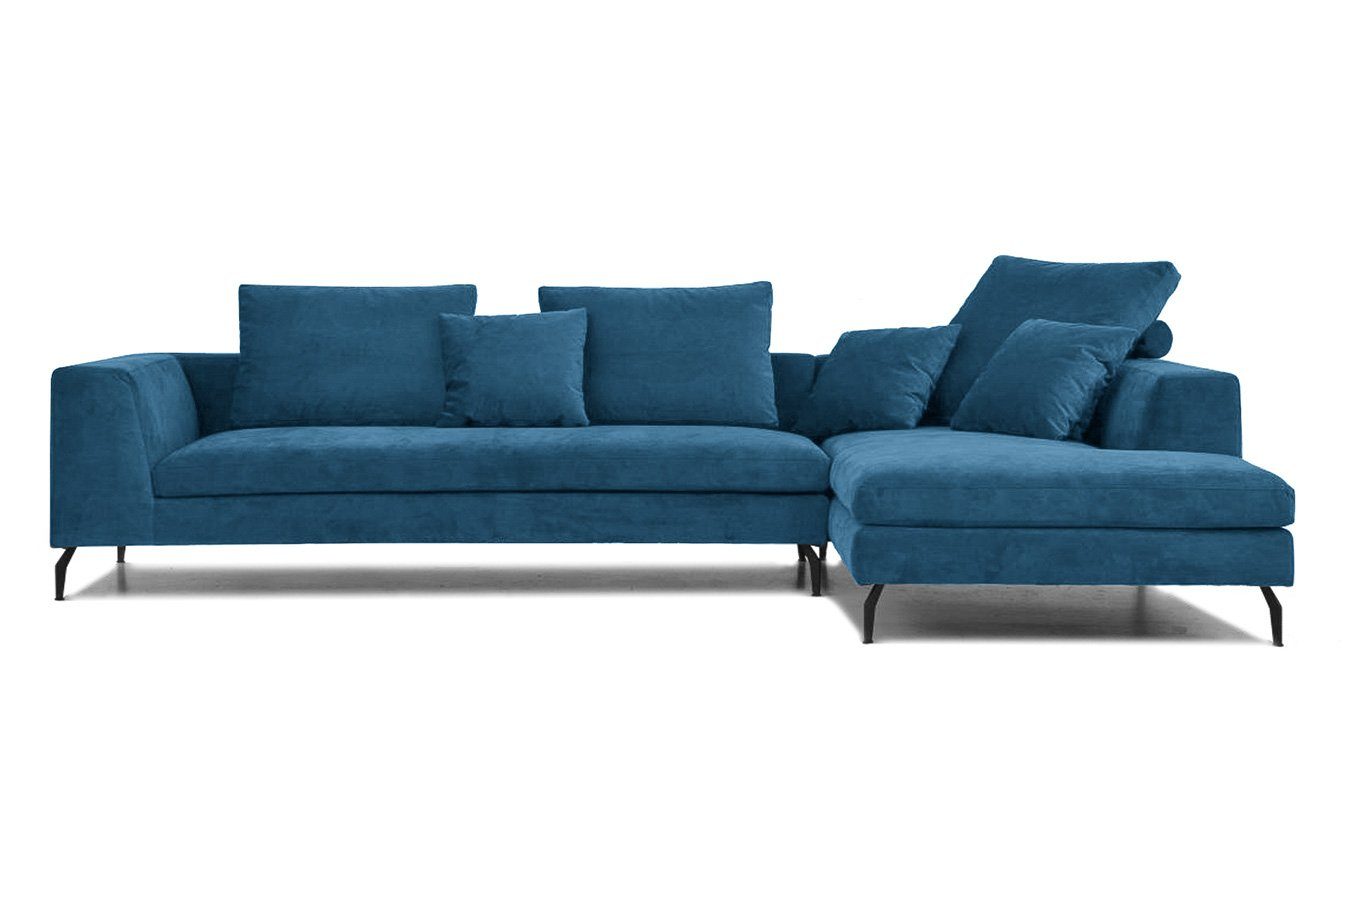 Ecksofa Messina living dunkelblau Stoff Big-Sofa Kombination daslagerhaus